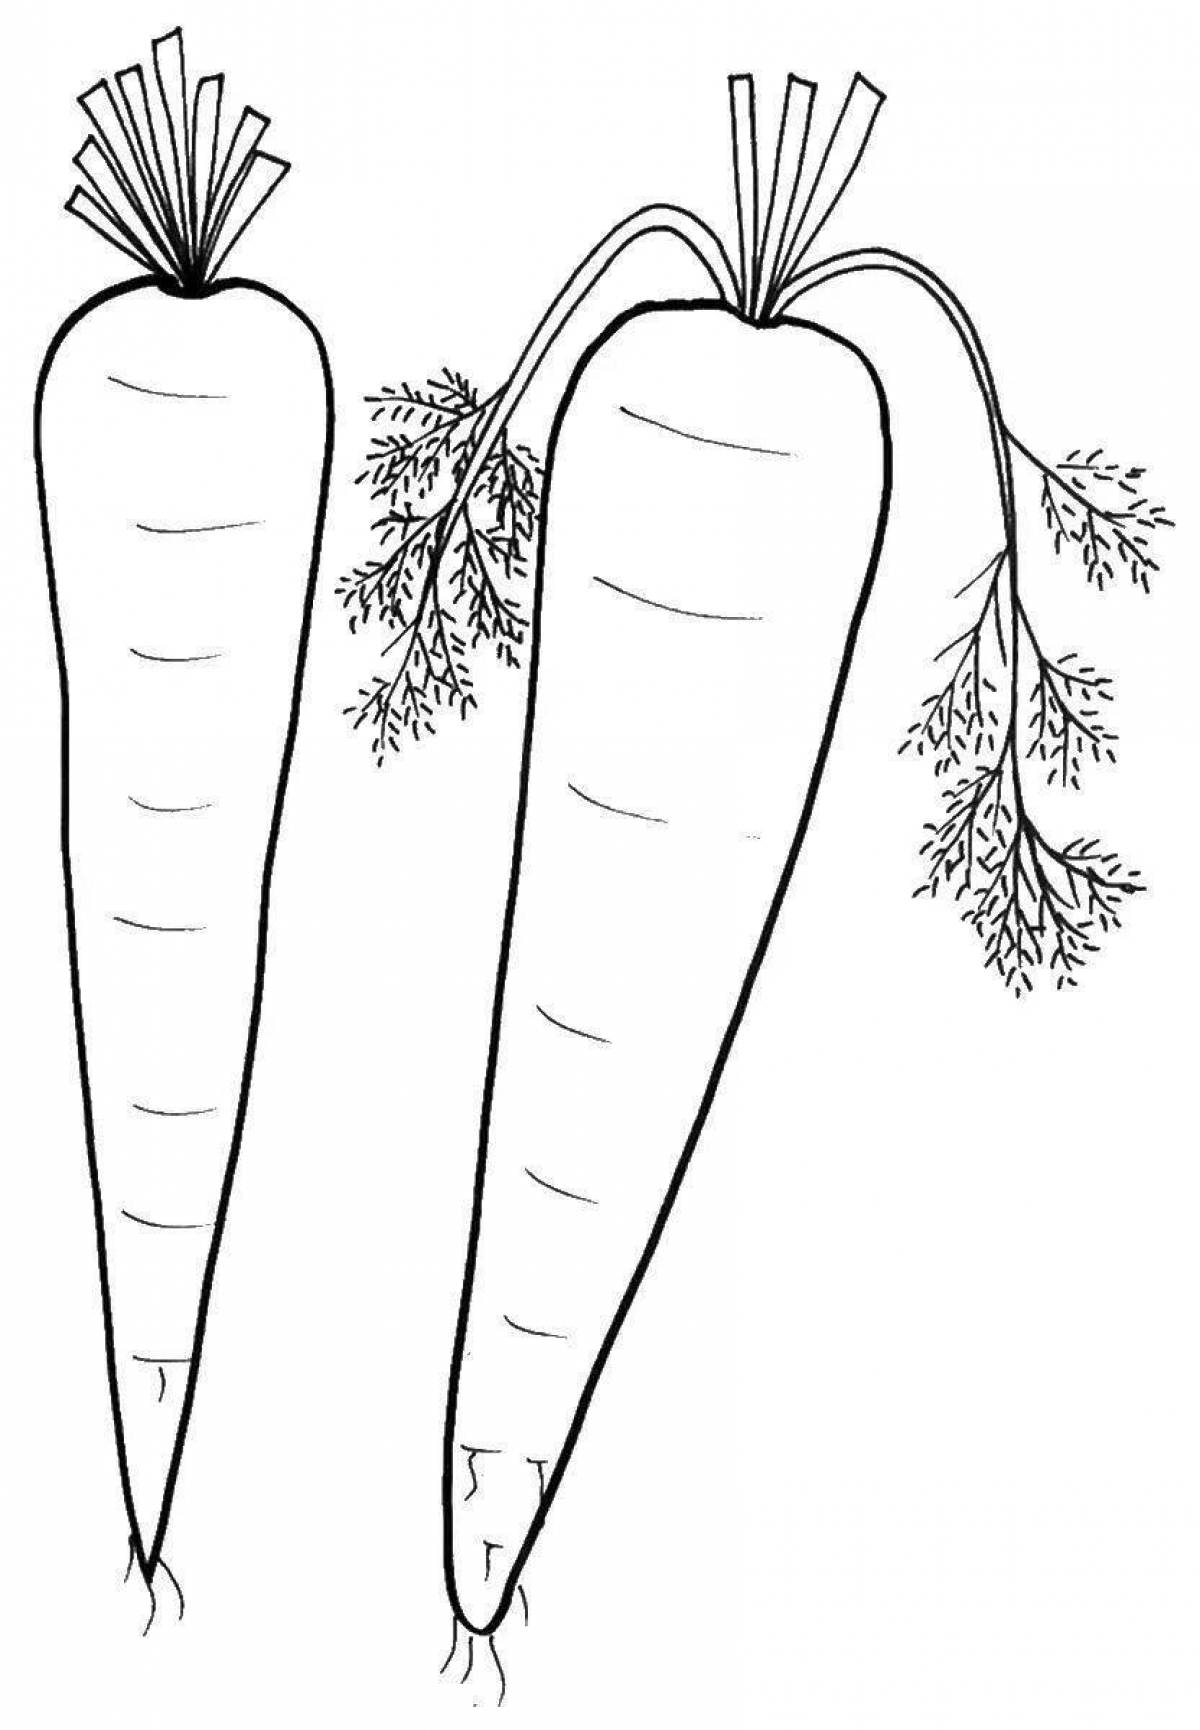 Fun carrot illustration